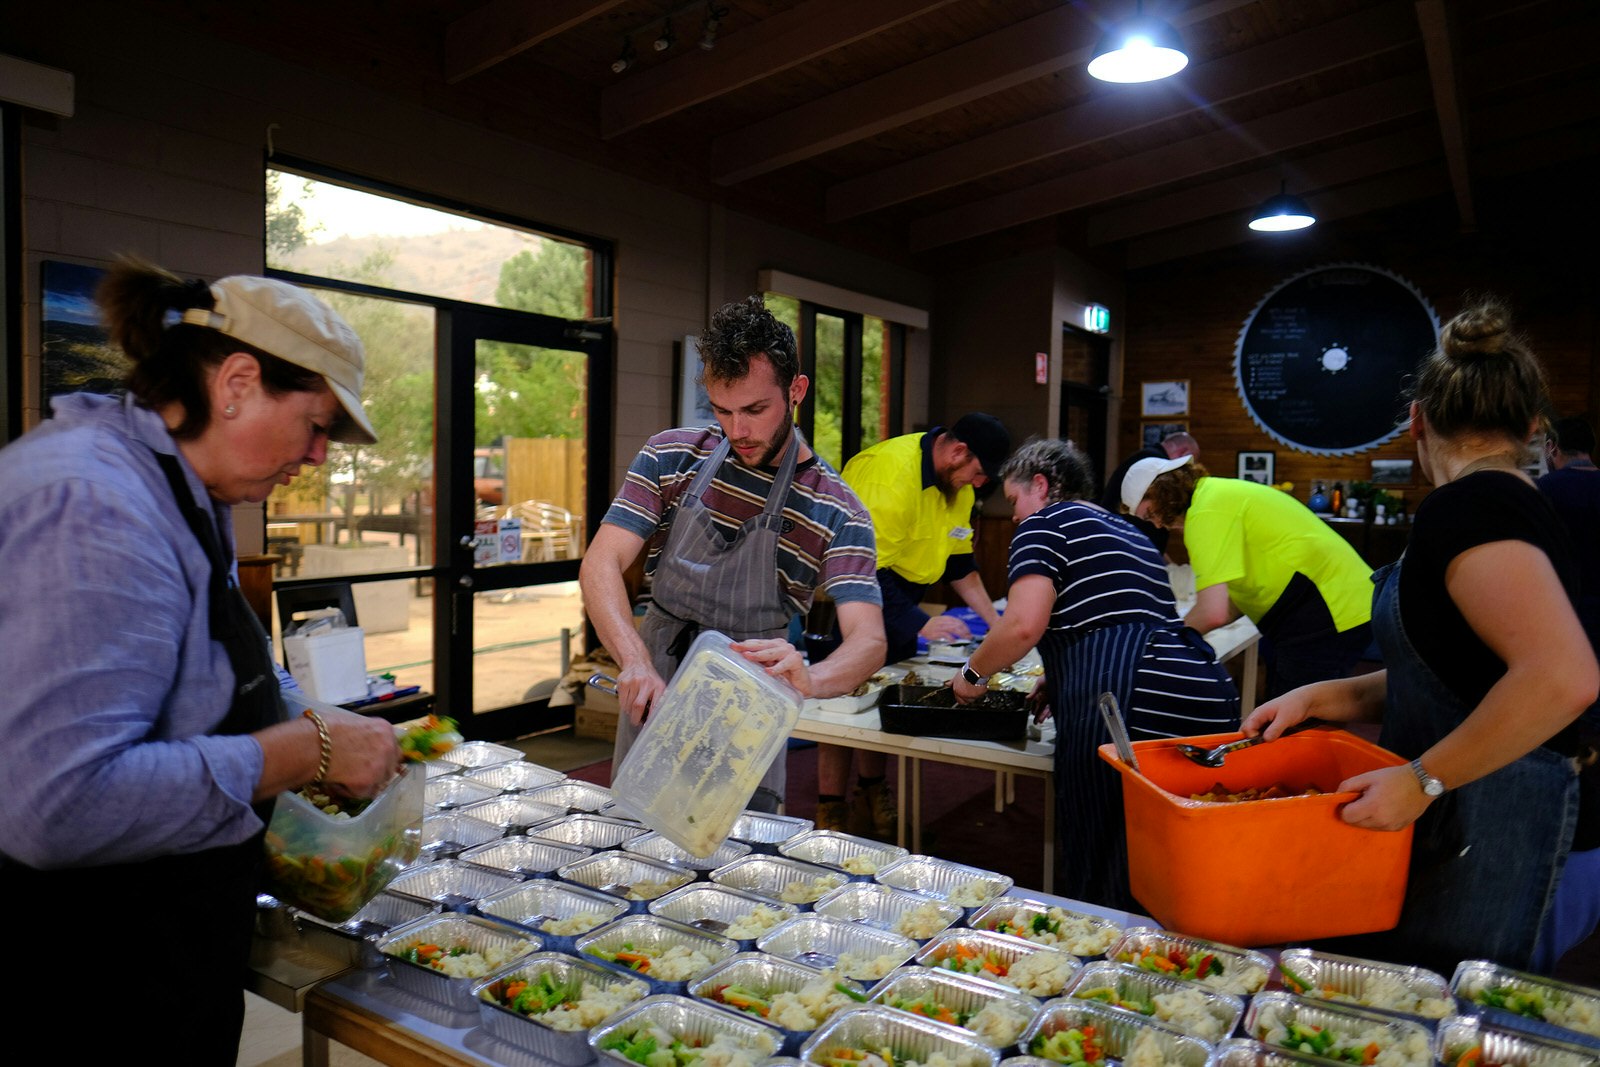 Volunteers pack food parcels for people affected by the bushfires in Australia